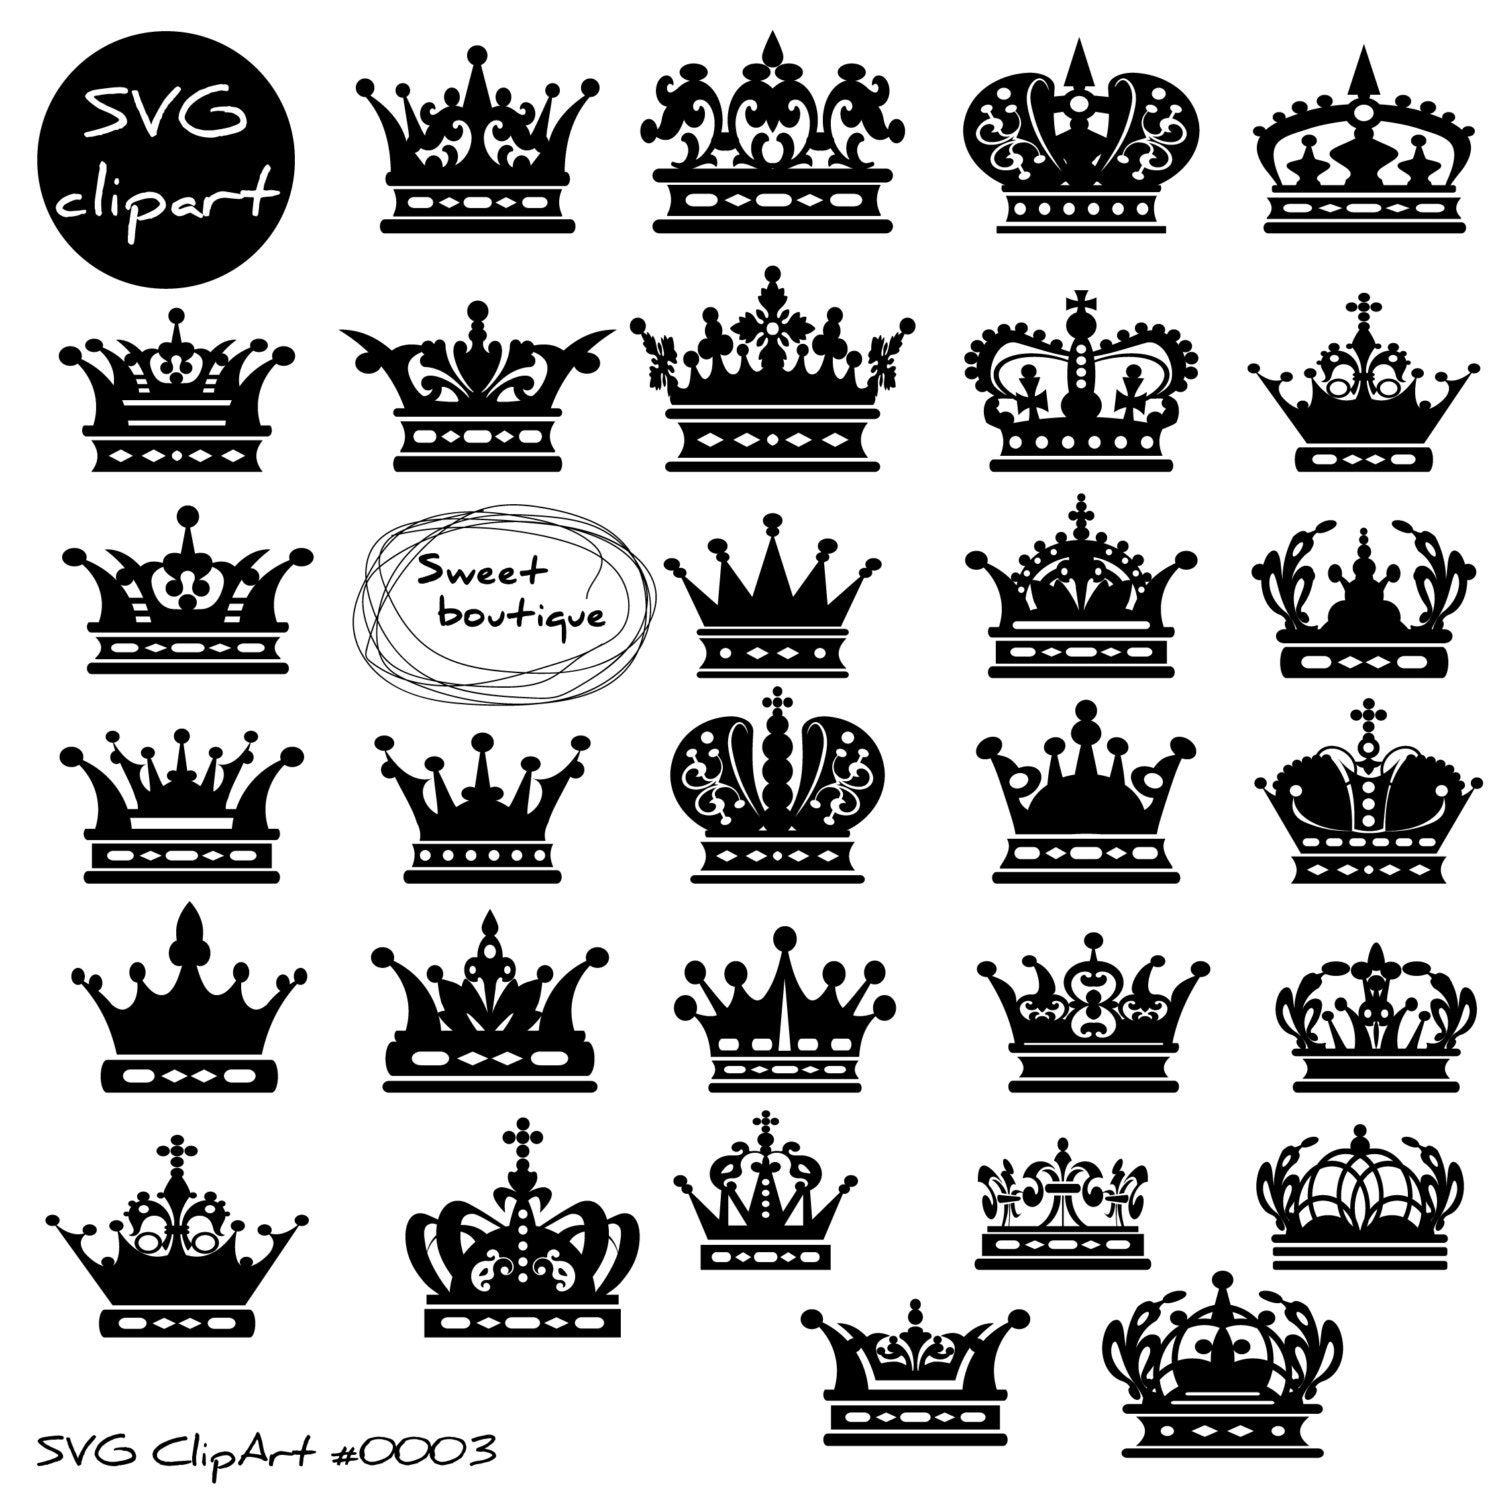 SVG Silhouette Crowns Digital Clip Art Crown Clipart Royal